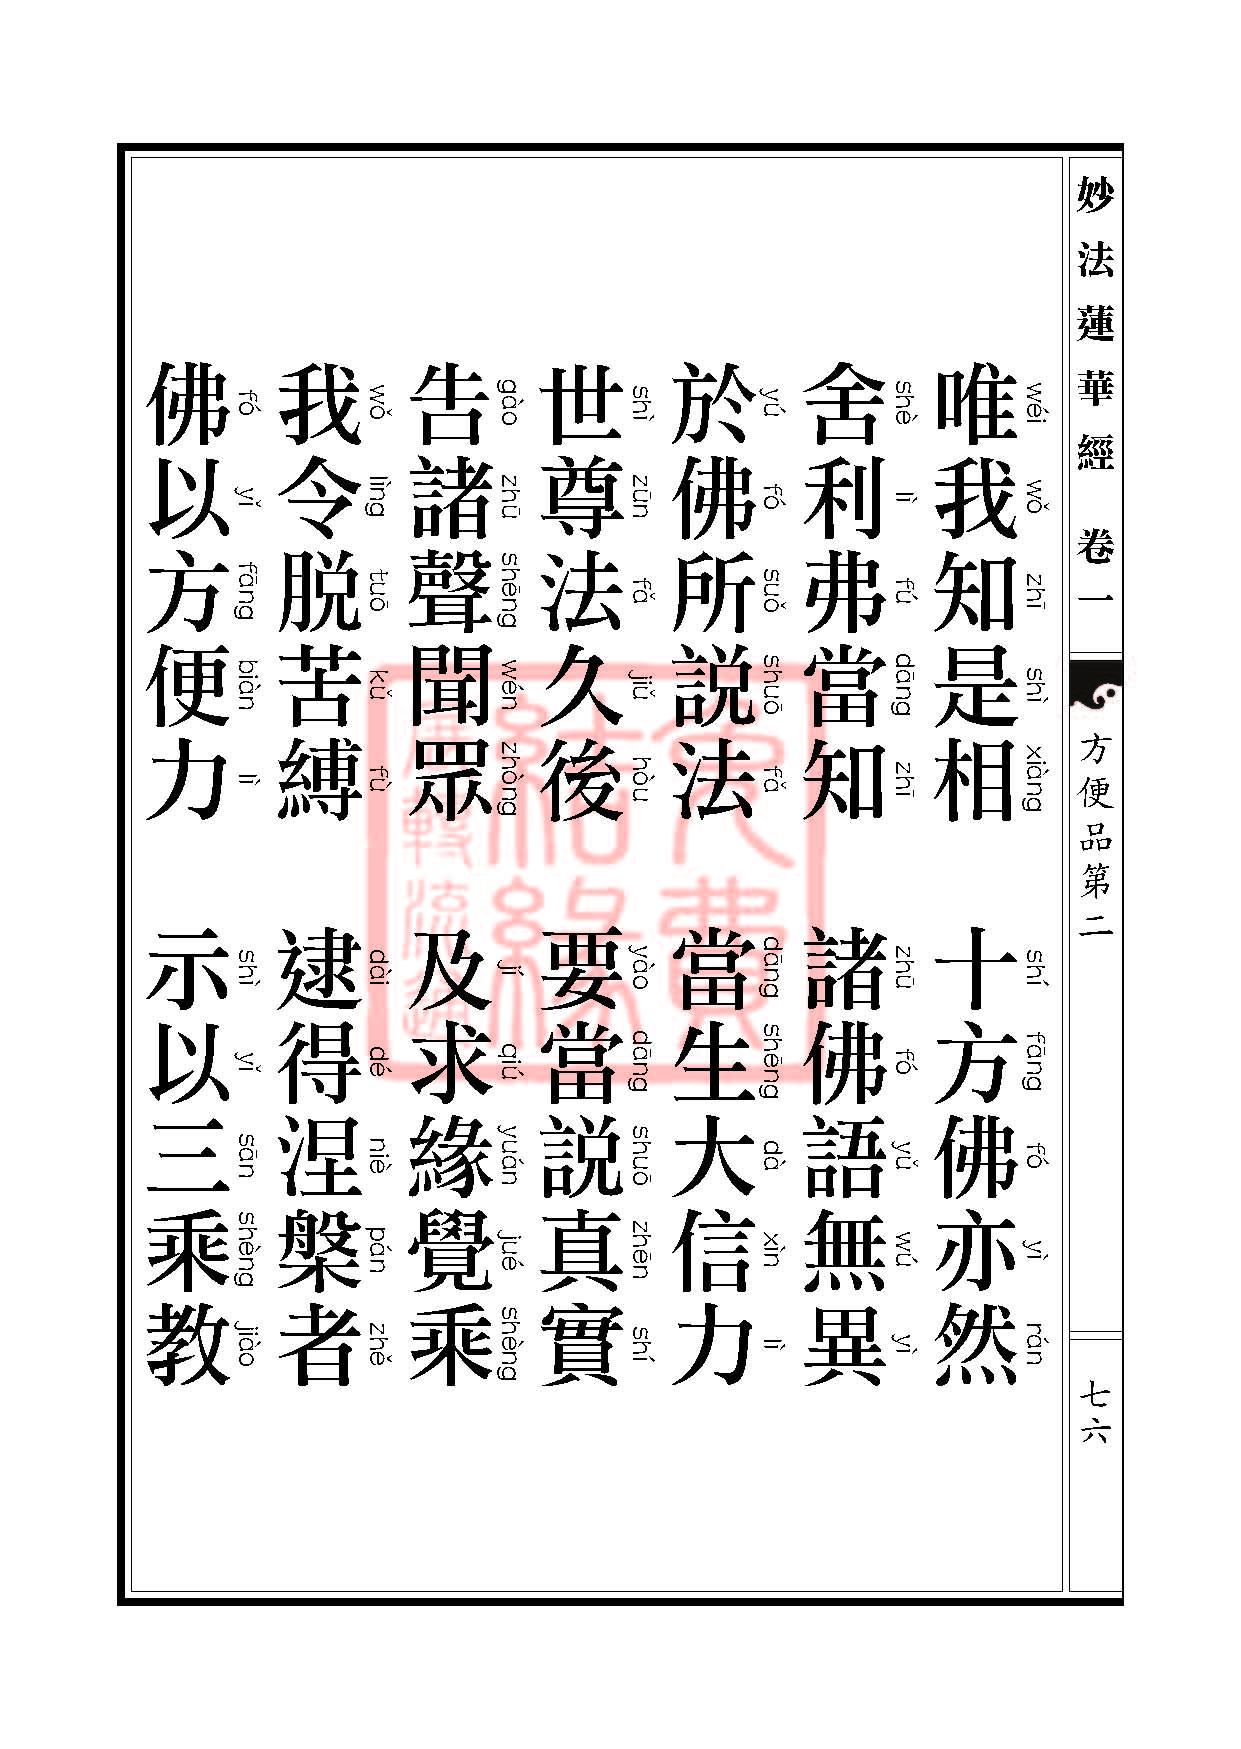 Book_FHJ_HK-A6-PY_Web_ҳ_076.jpg